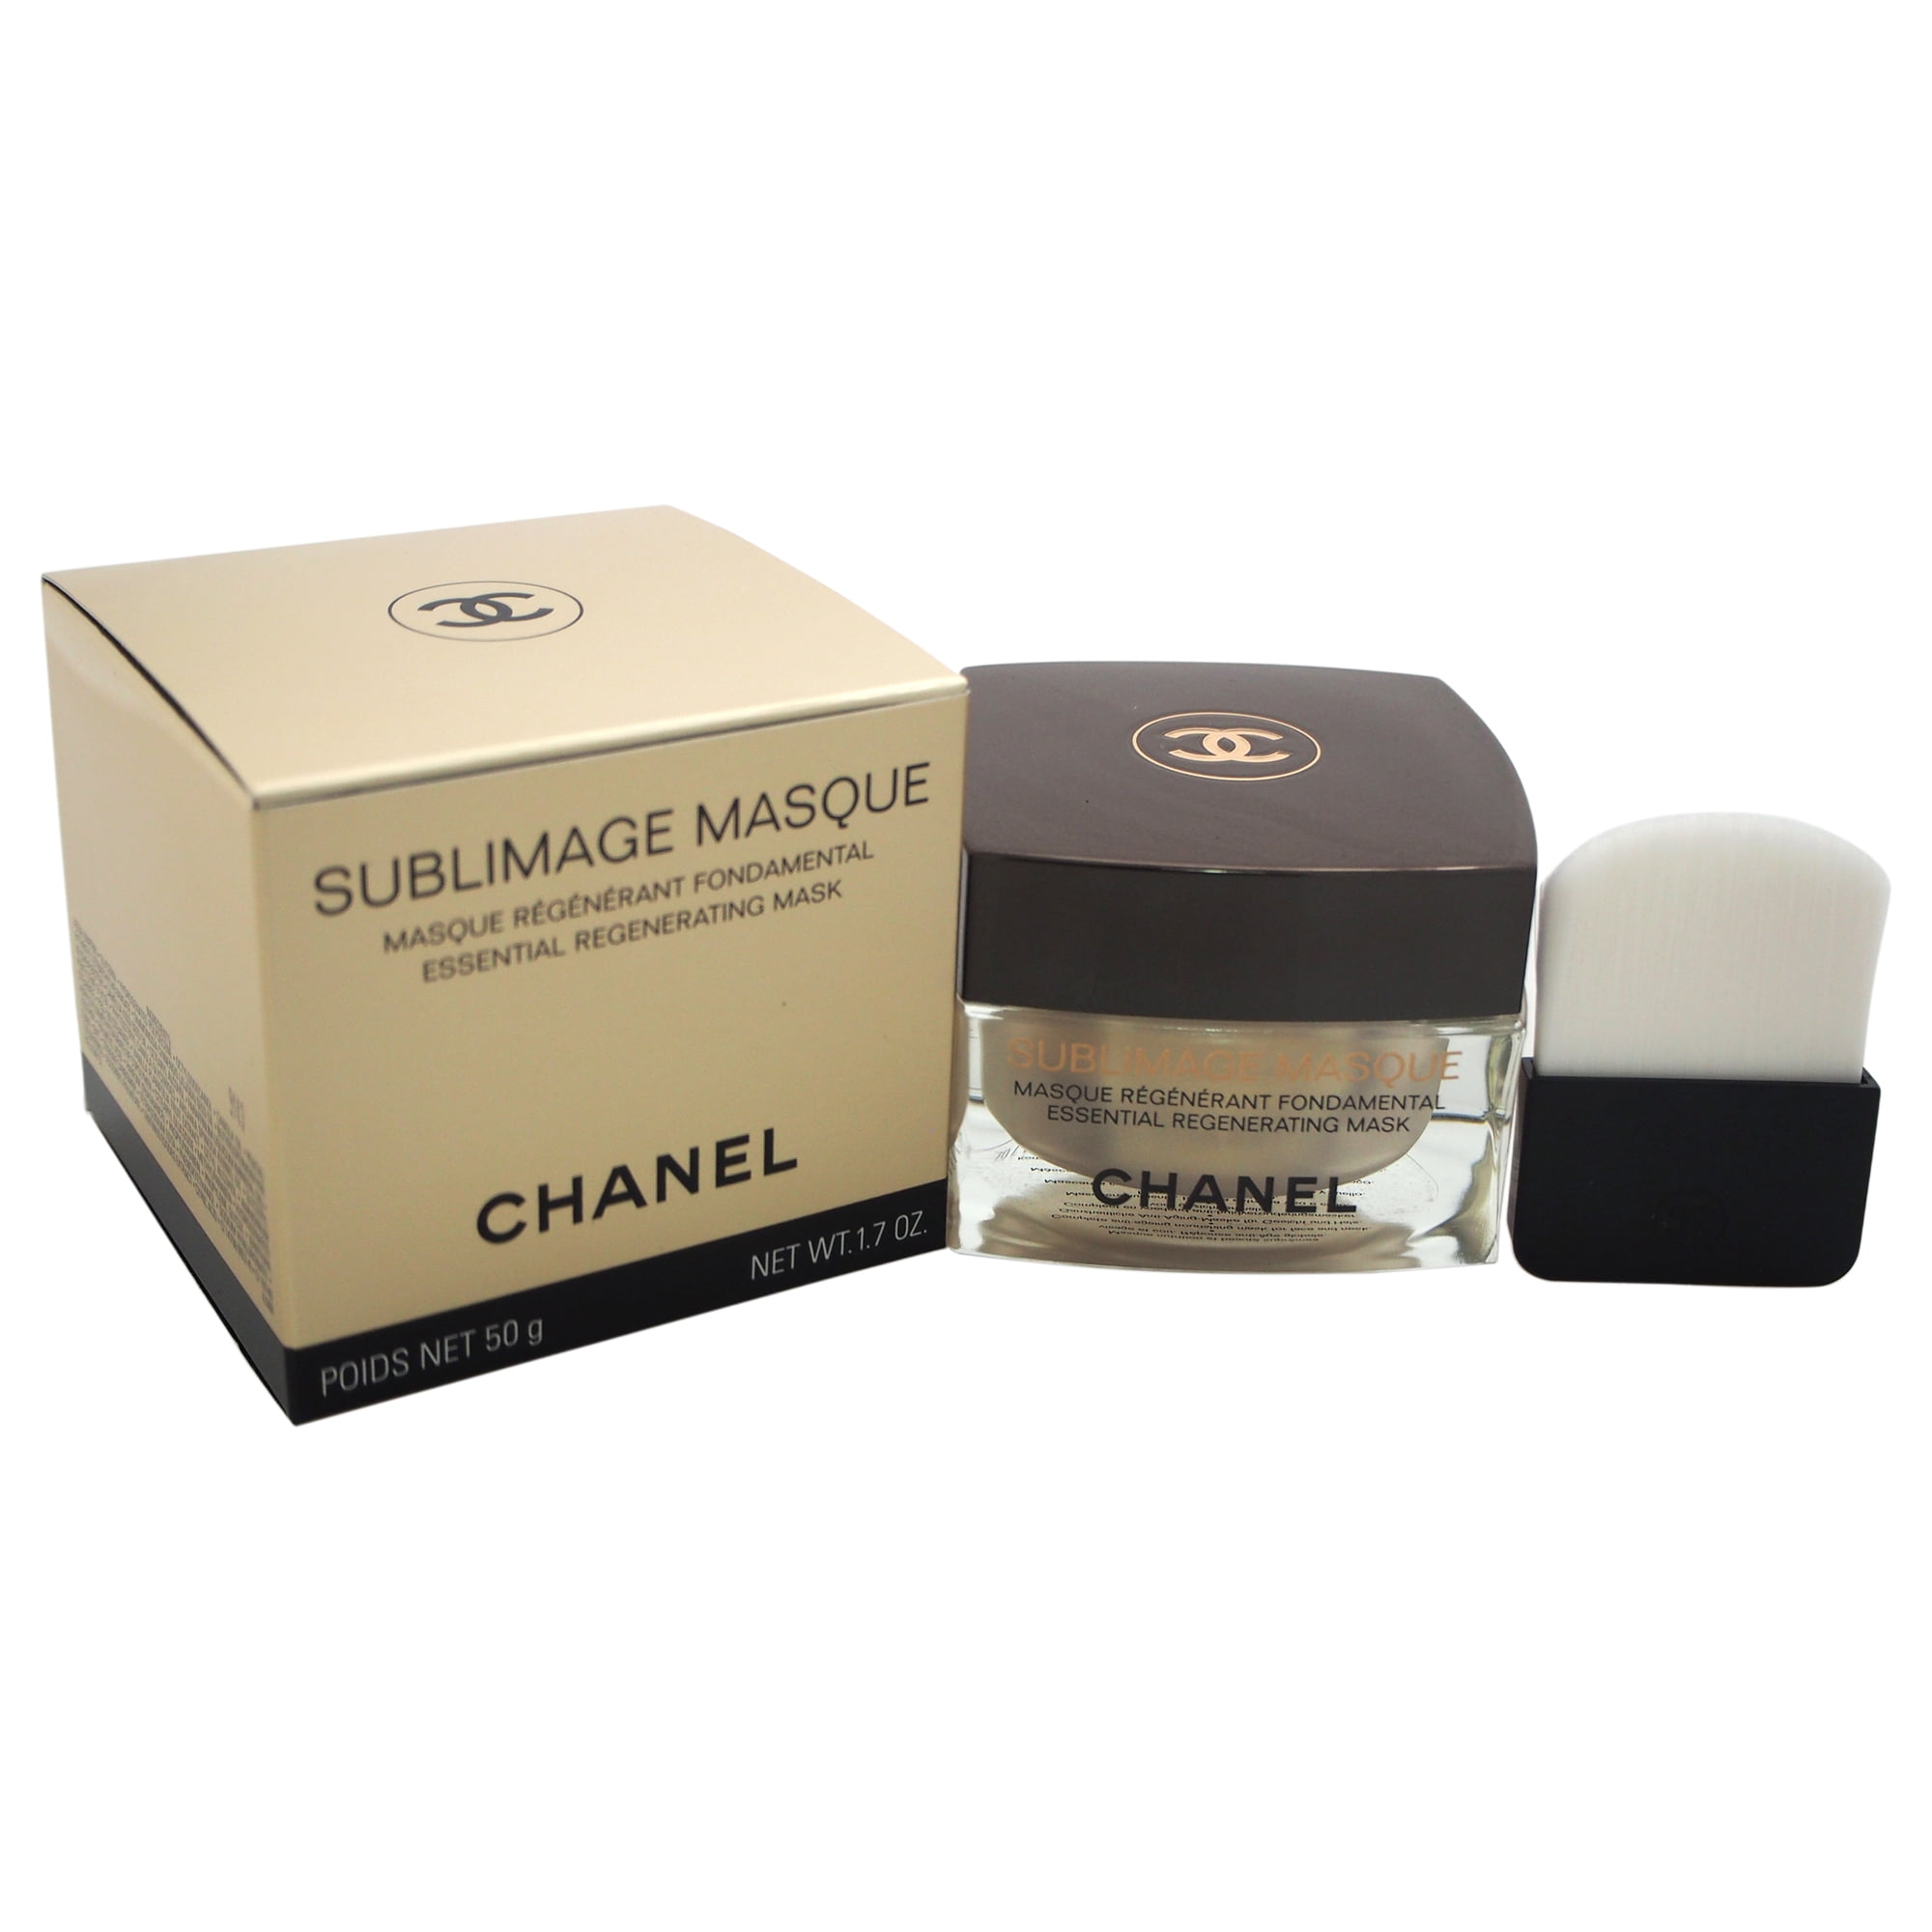 Chanel SUBLIMAGE MASQUE Essential Regenerating Mask 17 oz NIB Sealed  eBay